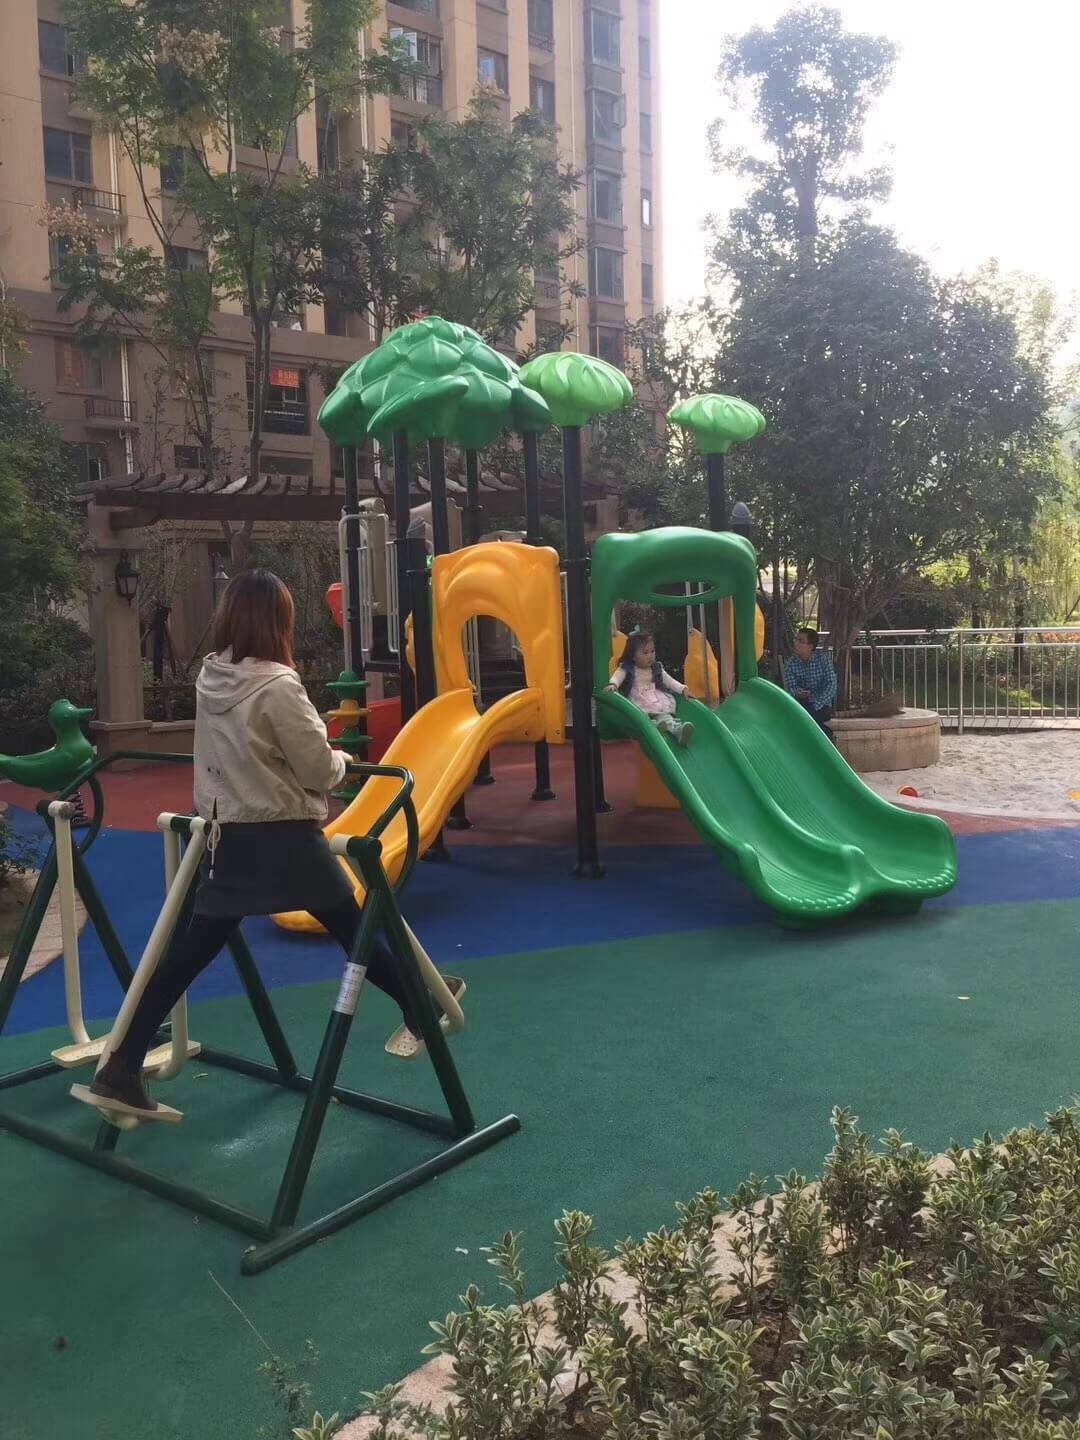 Outdoor playground